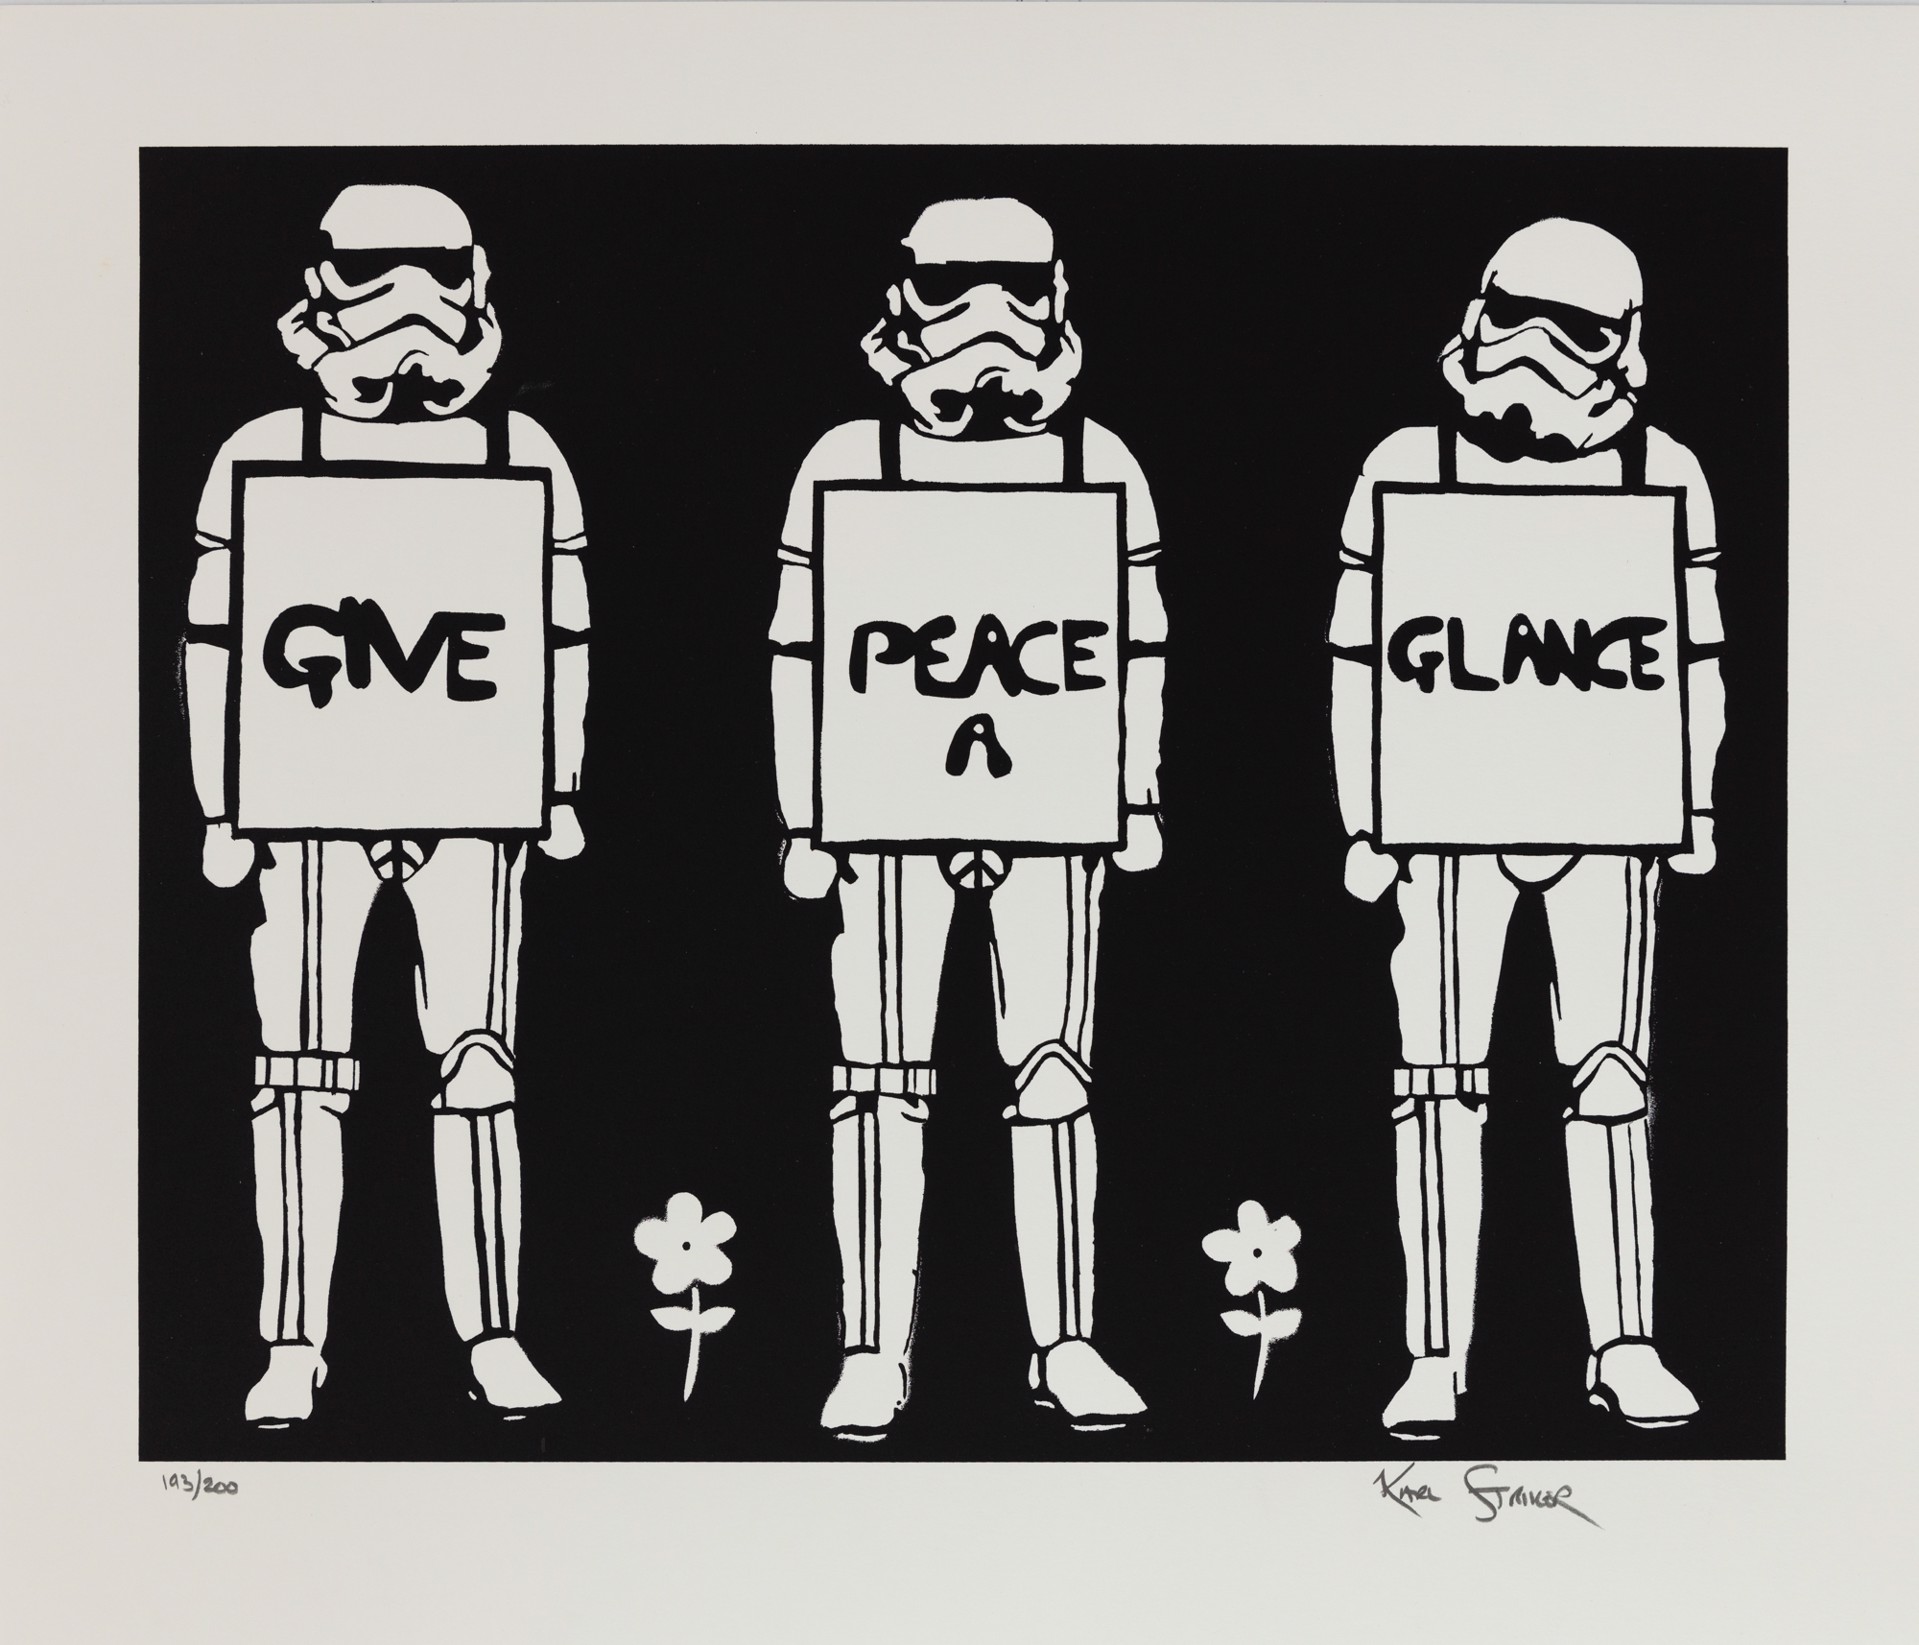 Give Peace a Glance by Karl Striker